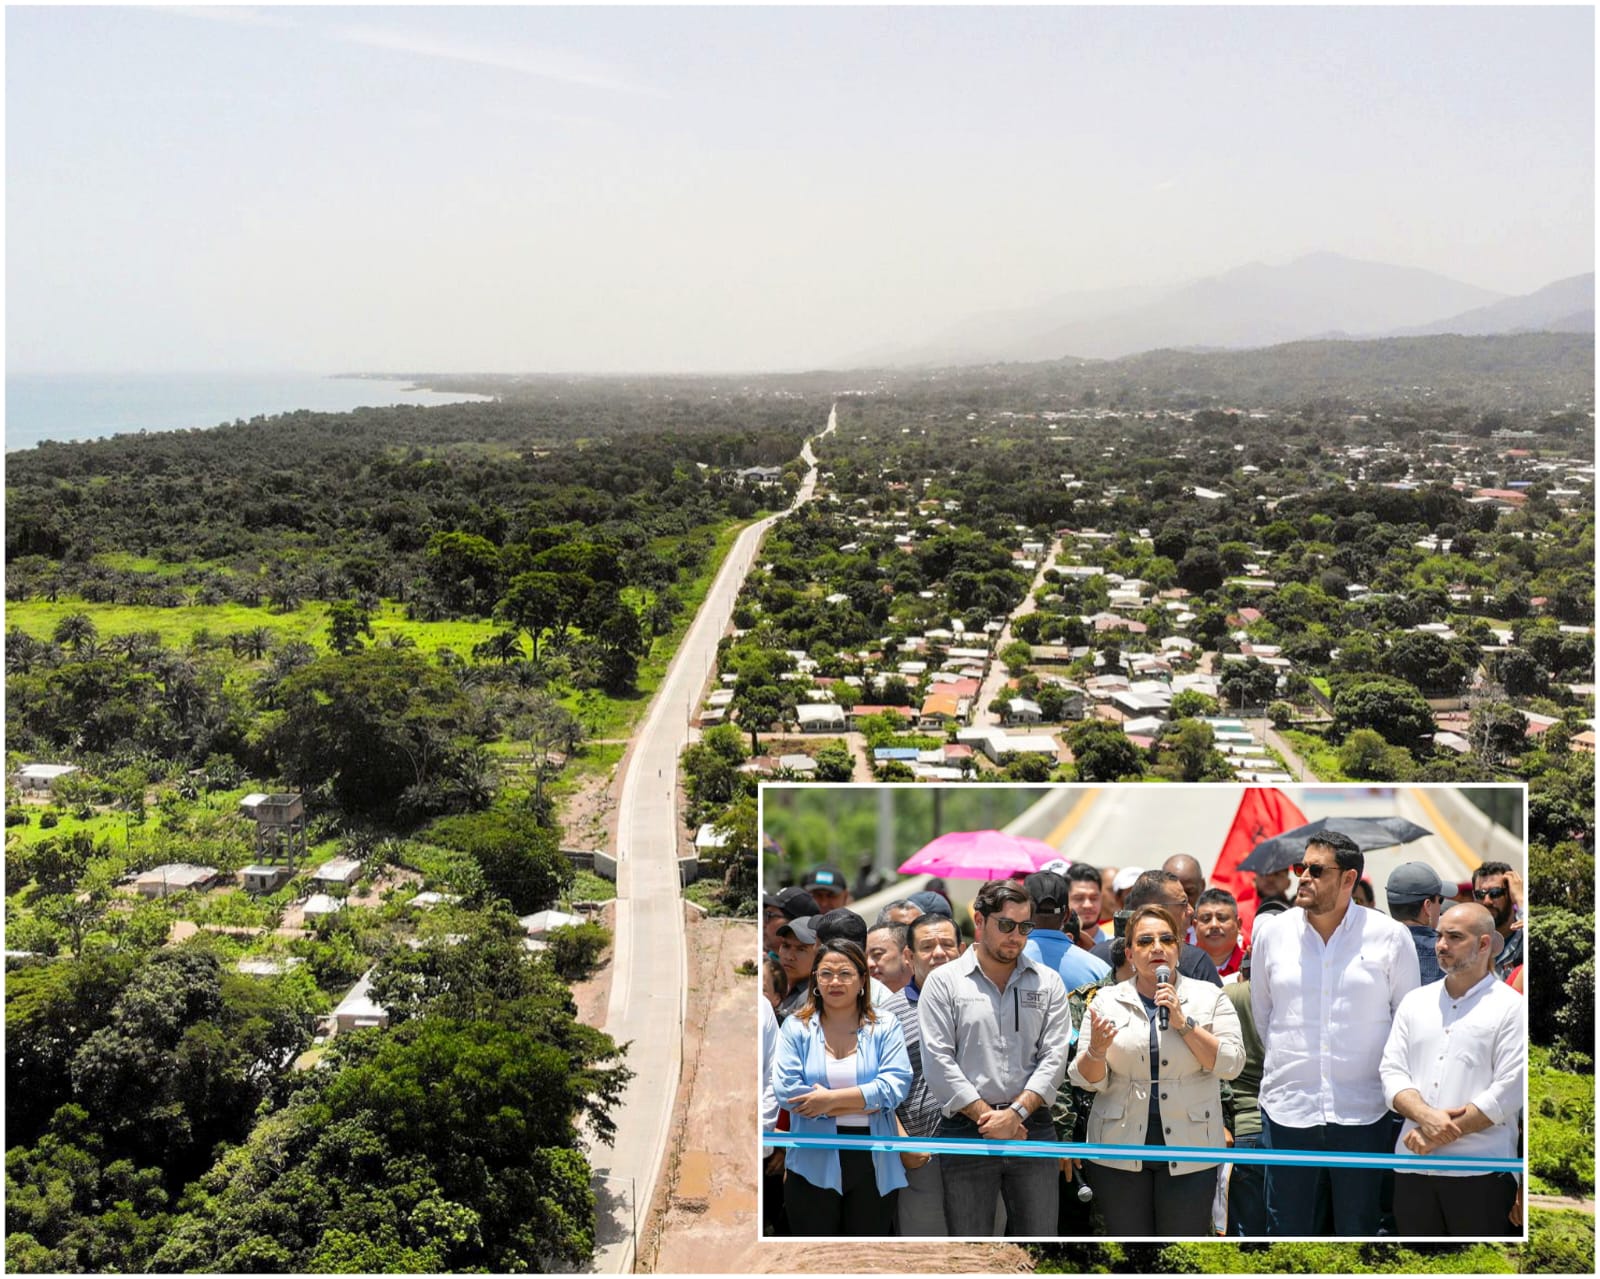 Presidenta Xiomara Castro inauguró pavimentación de Calle 8 en La Ceiba a un costo de L707.9 millones que beneficiará a 440 mil habitantes